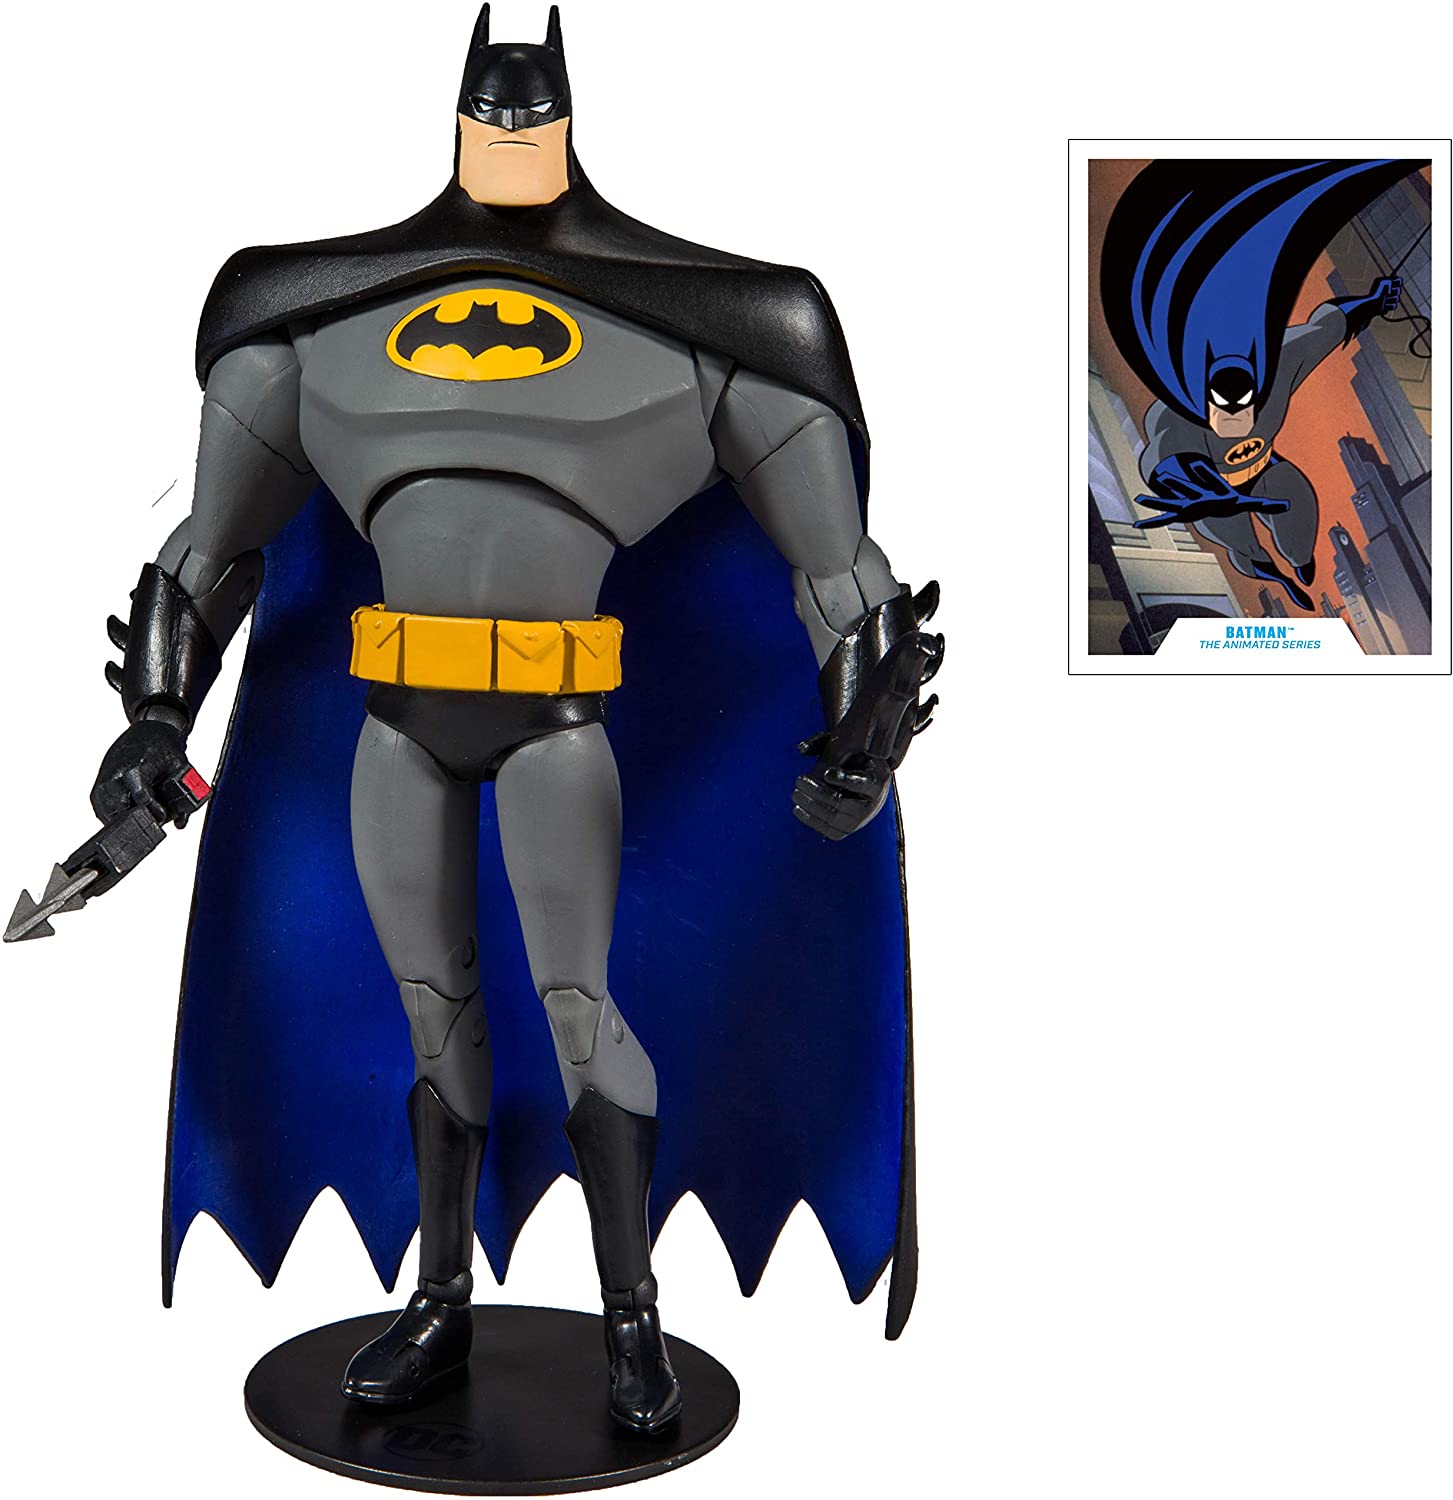 DC Multiverse - Animated Batman McFarlane Toys